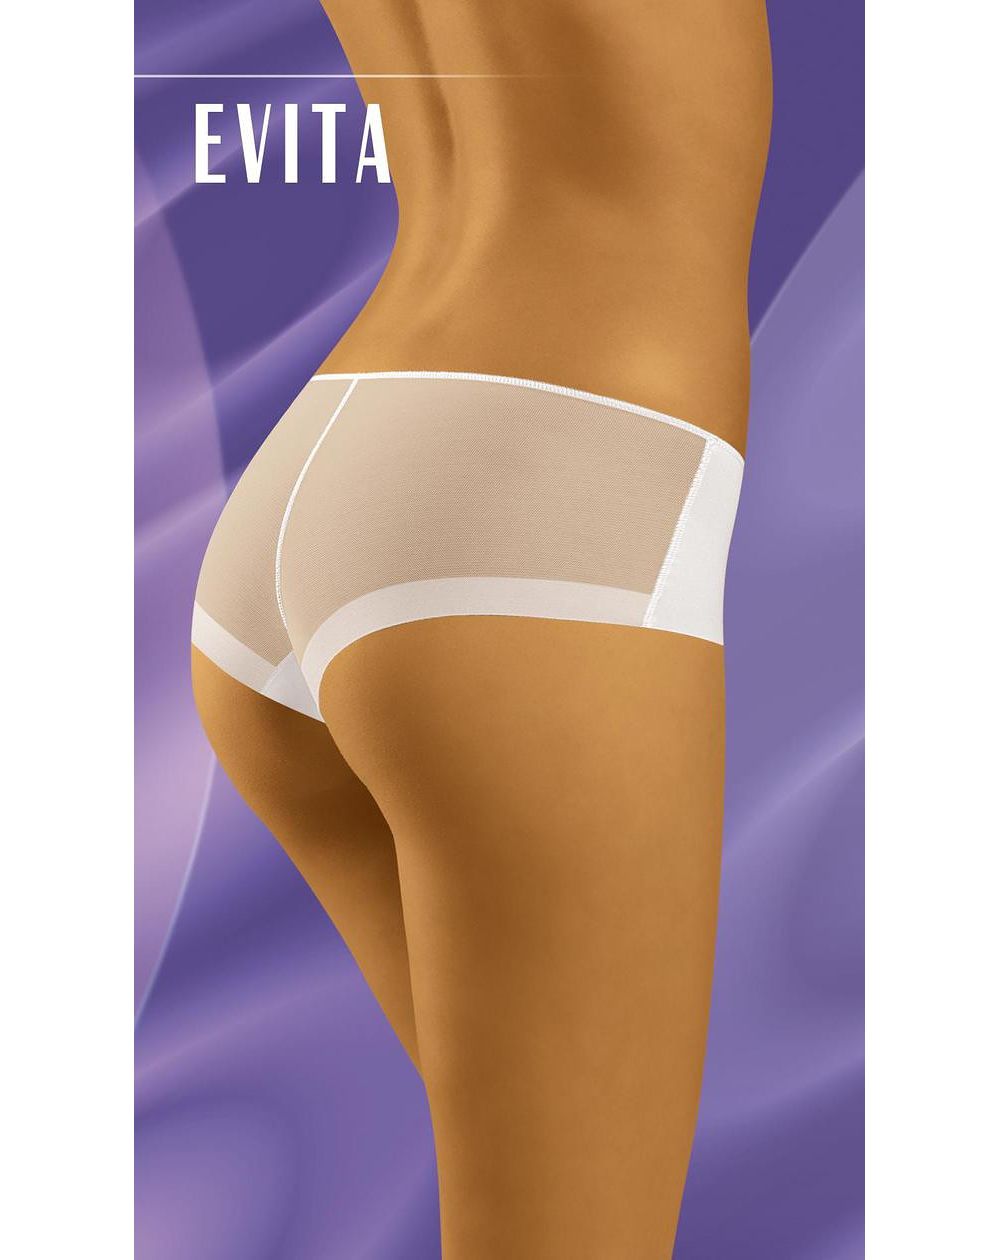 Pantalones cortos Wolbar Evita